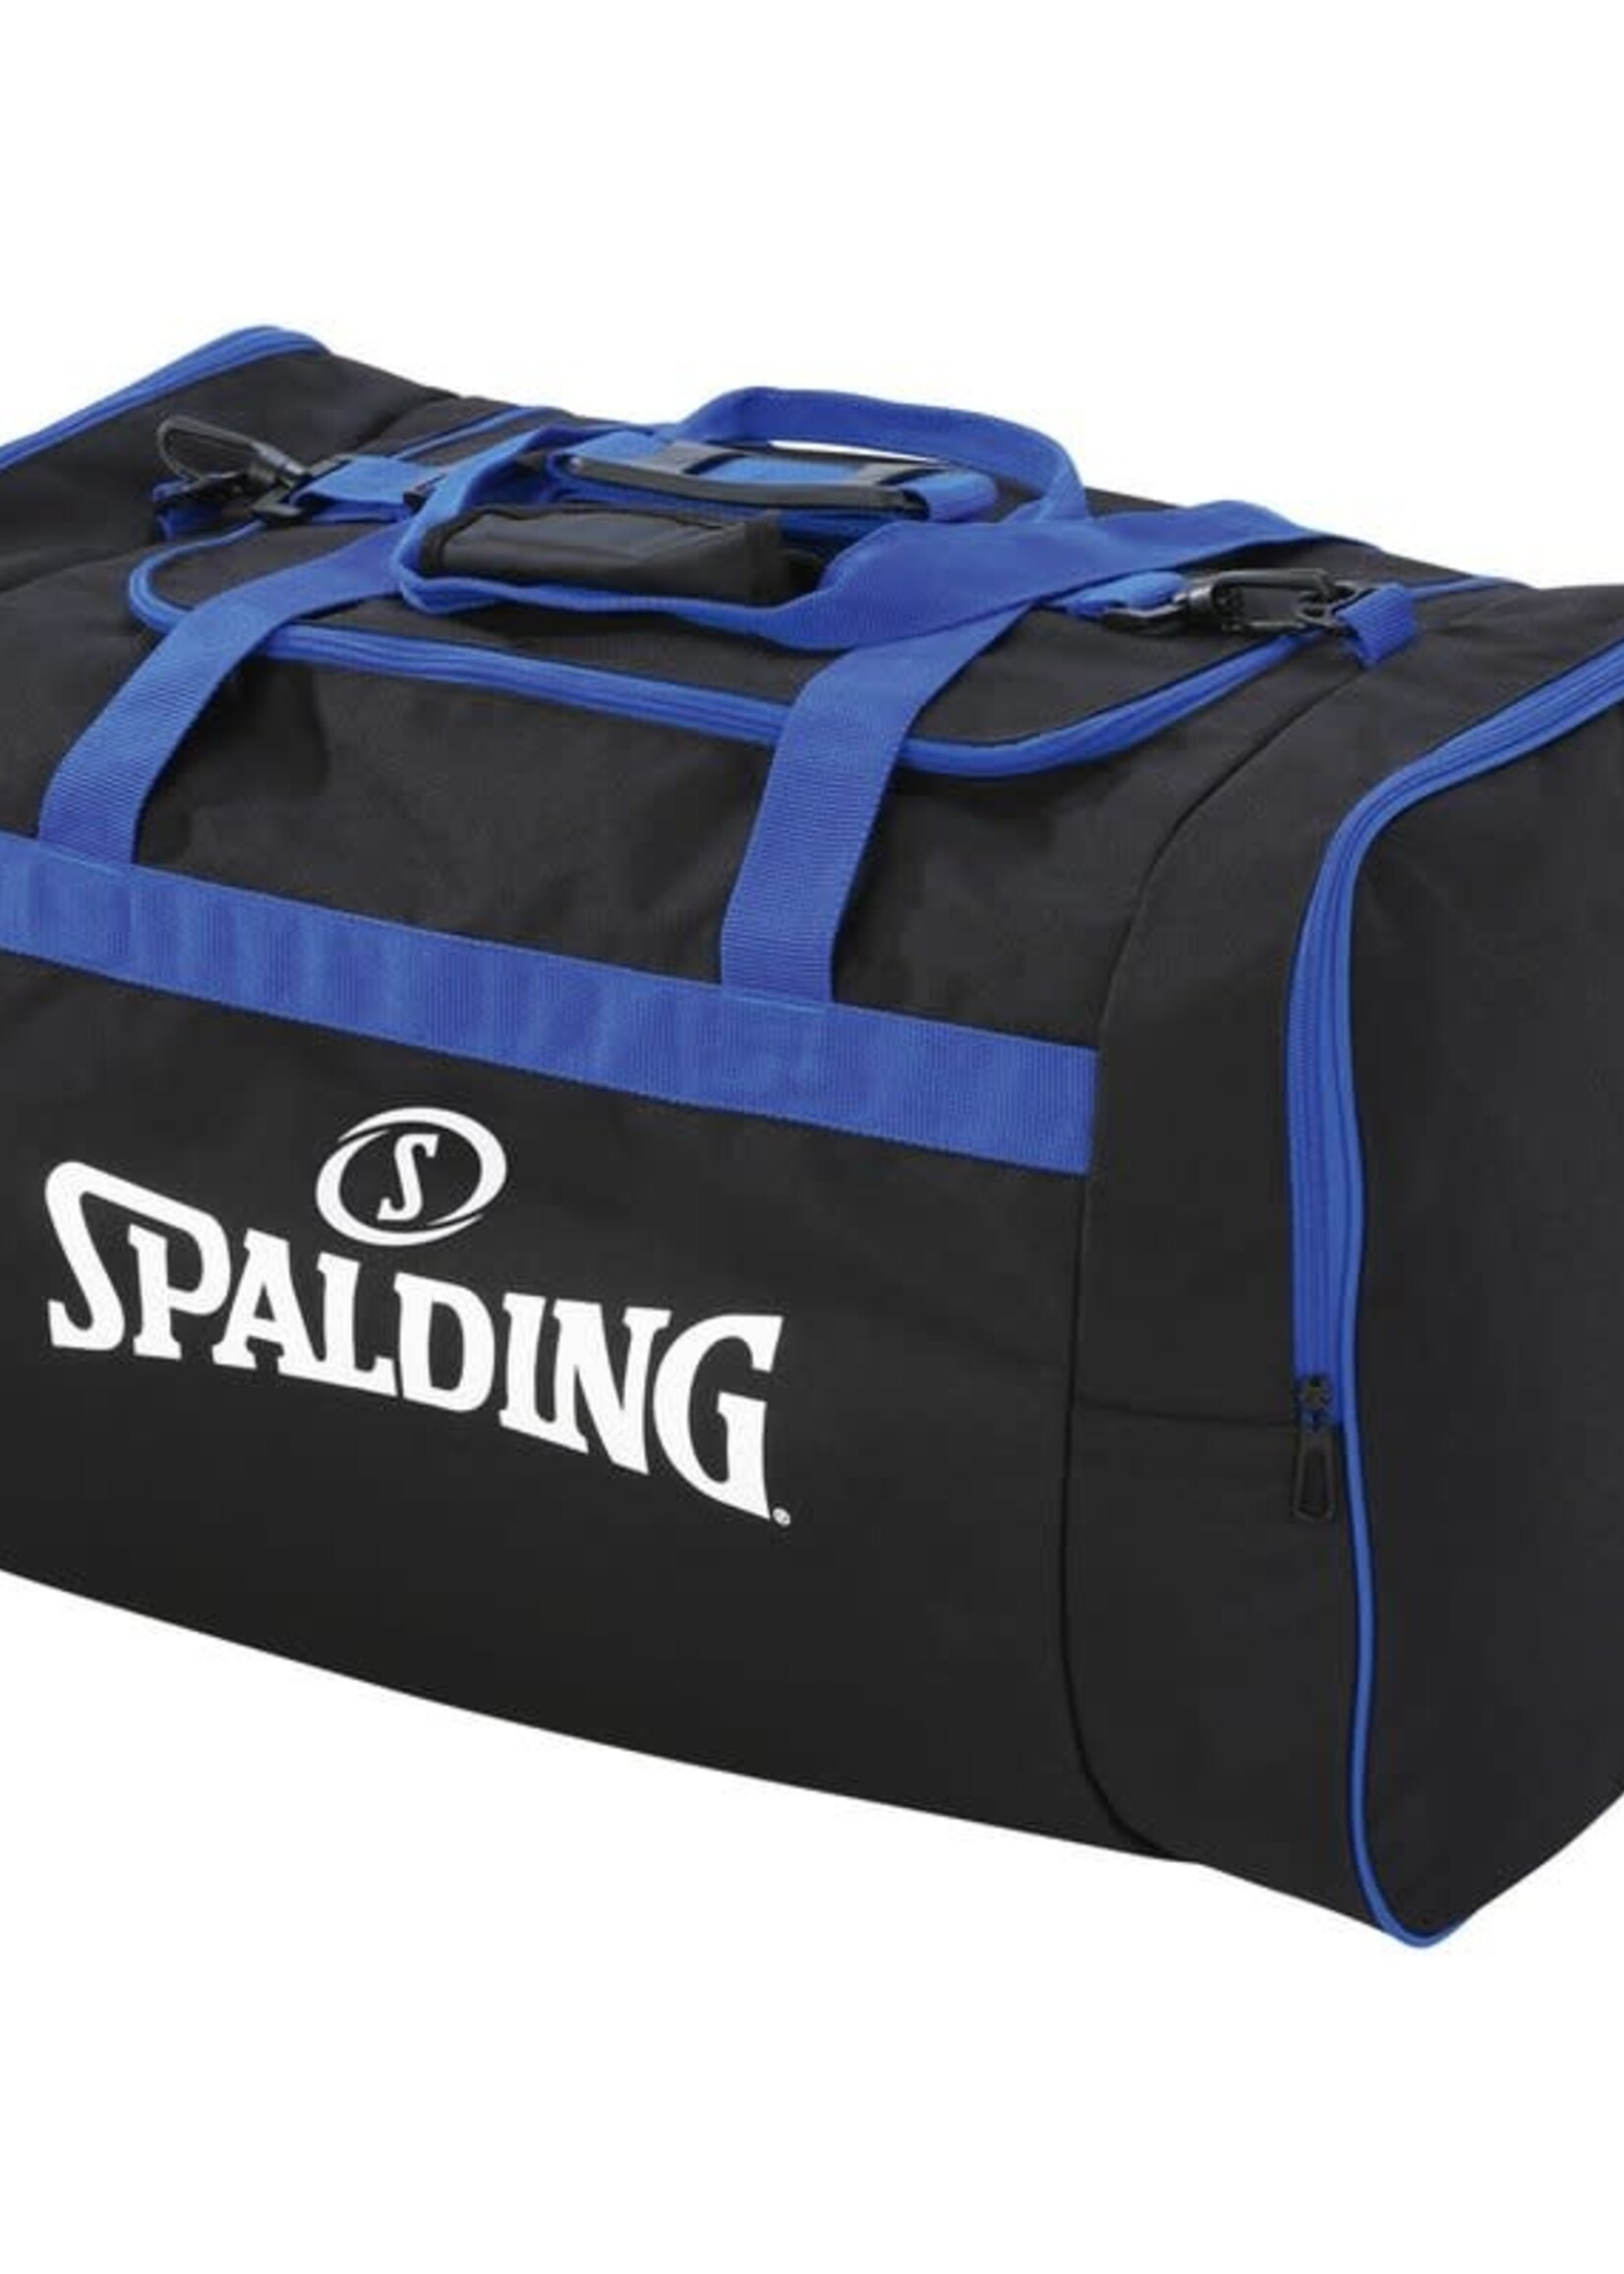 Spalding Team Bag Large 80L Zwart Blauw